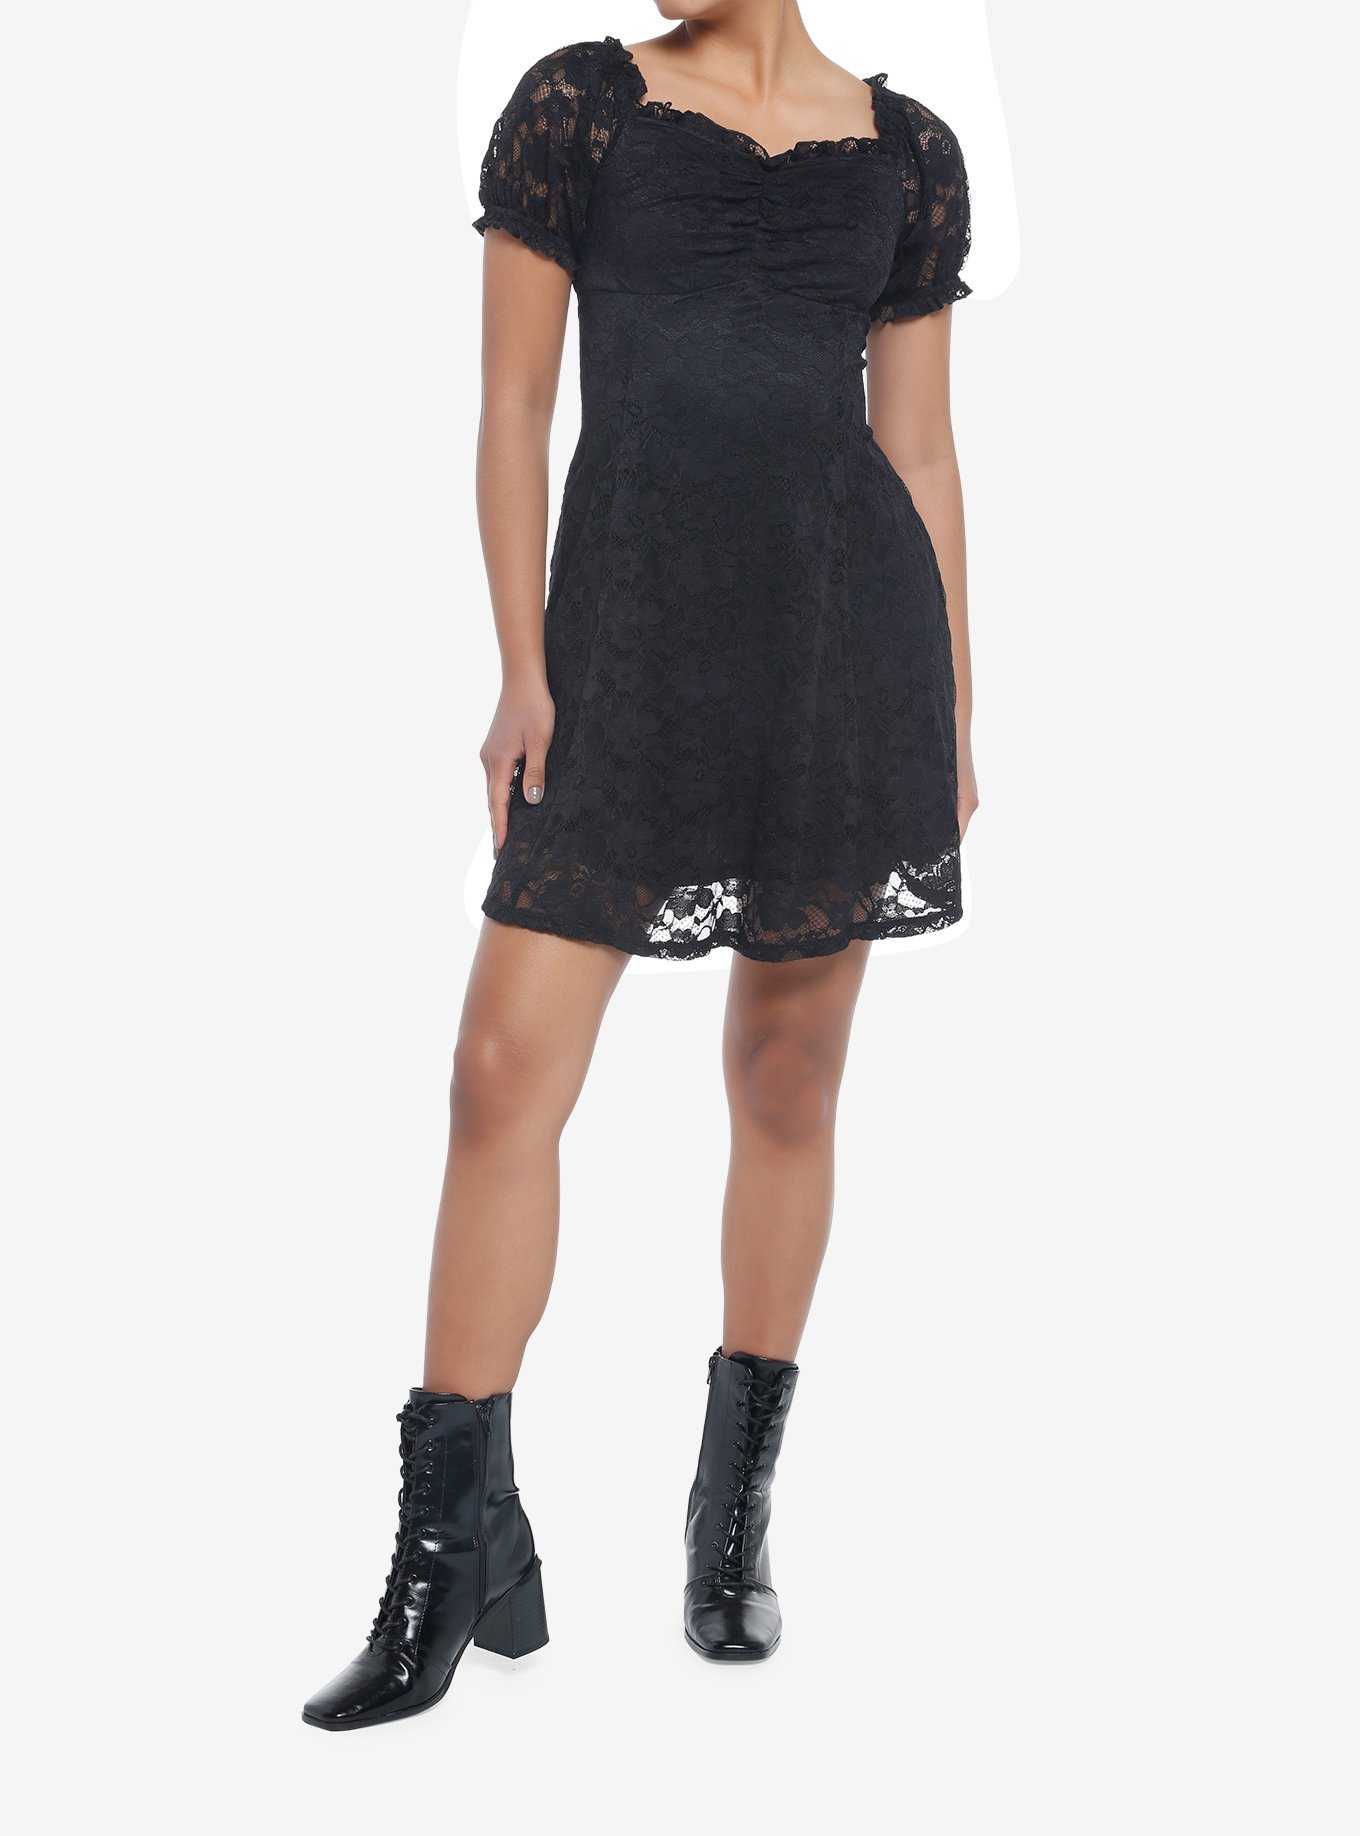 Black Lace Babydoll Dress, , hi-res